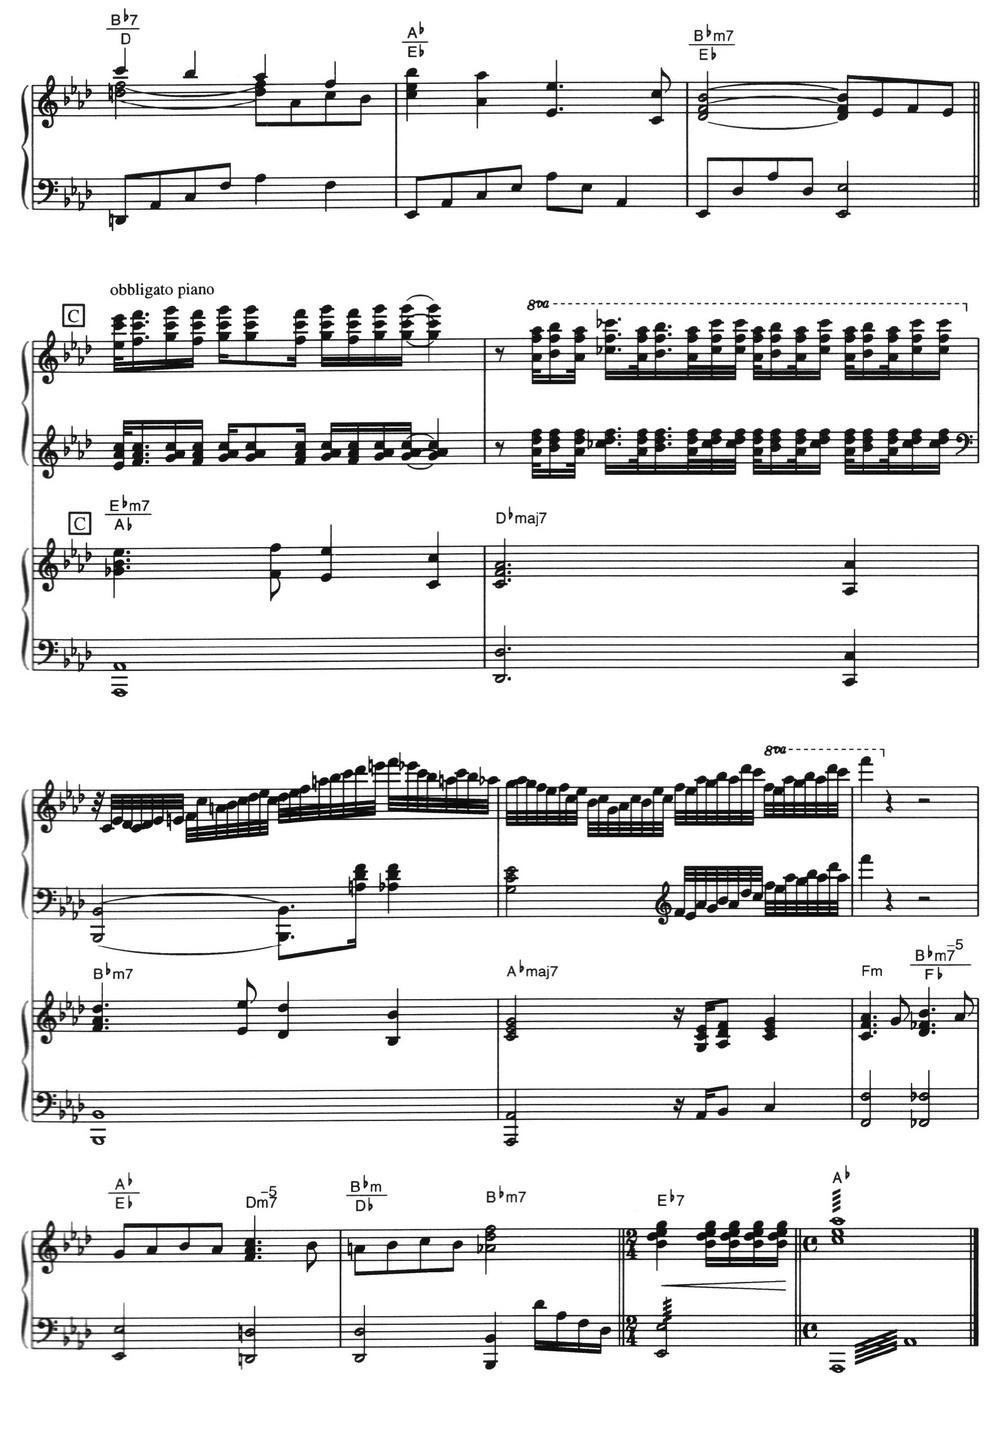 1900 s theme钢琴谱